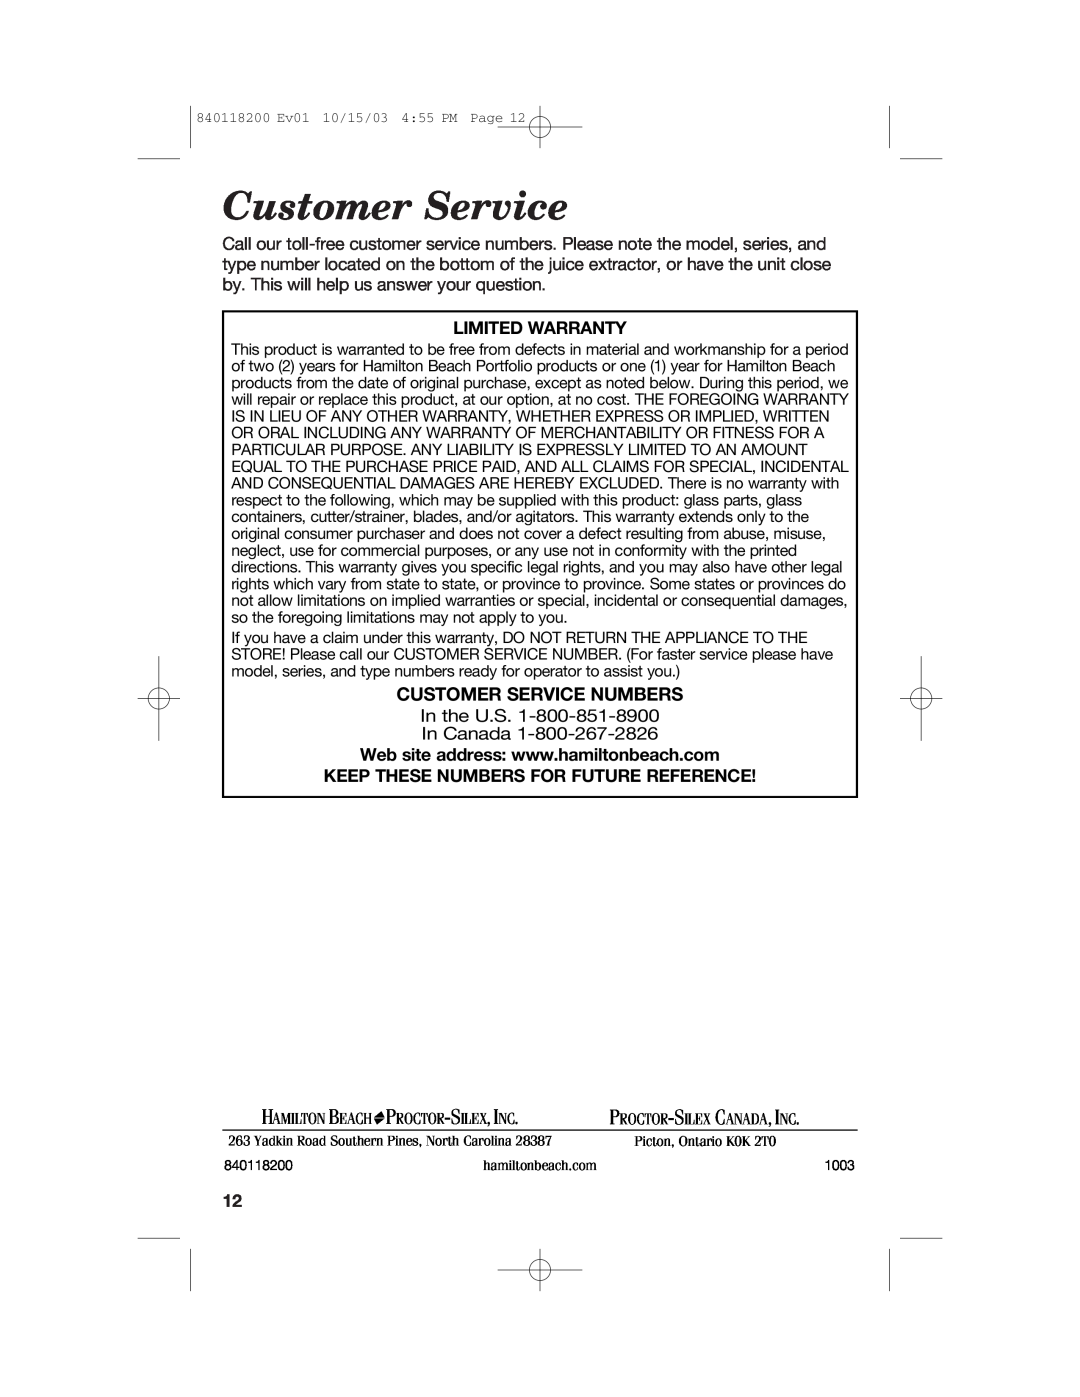 Hamilton Beach 67900 manual Customer Service Numbers, Proctor-Silex,Inc 